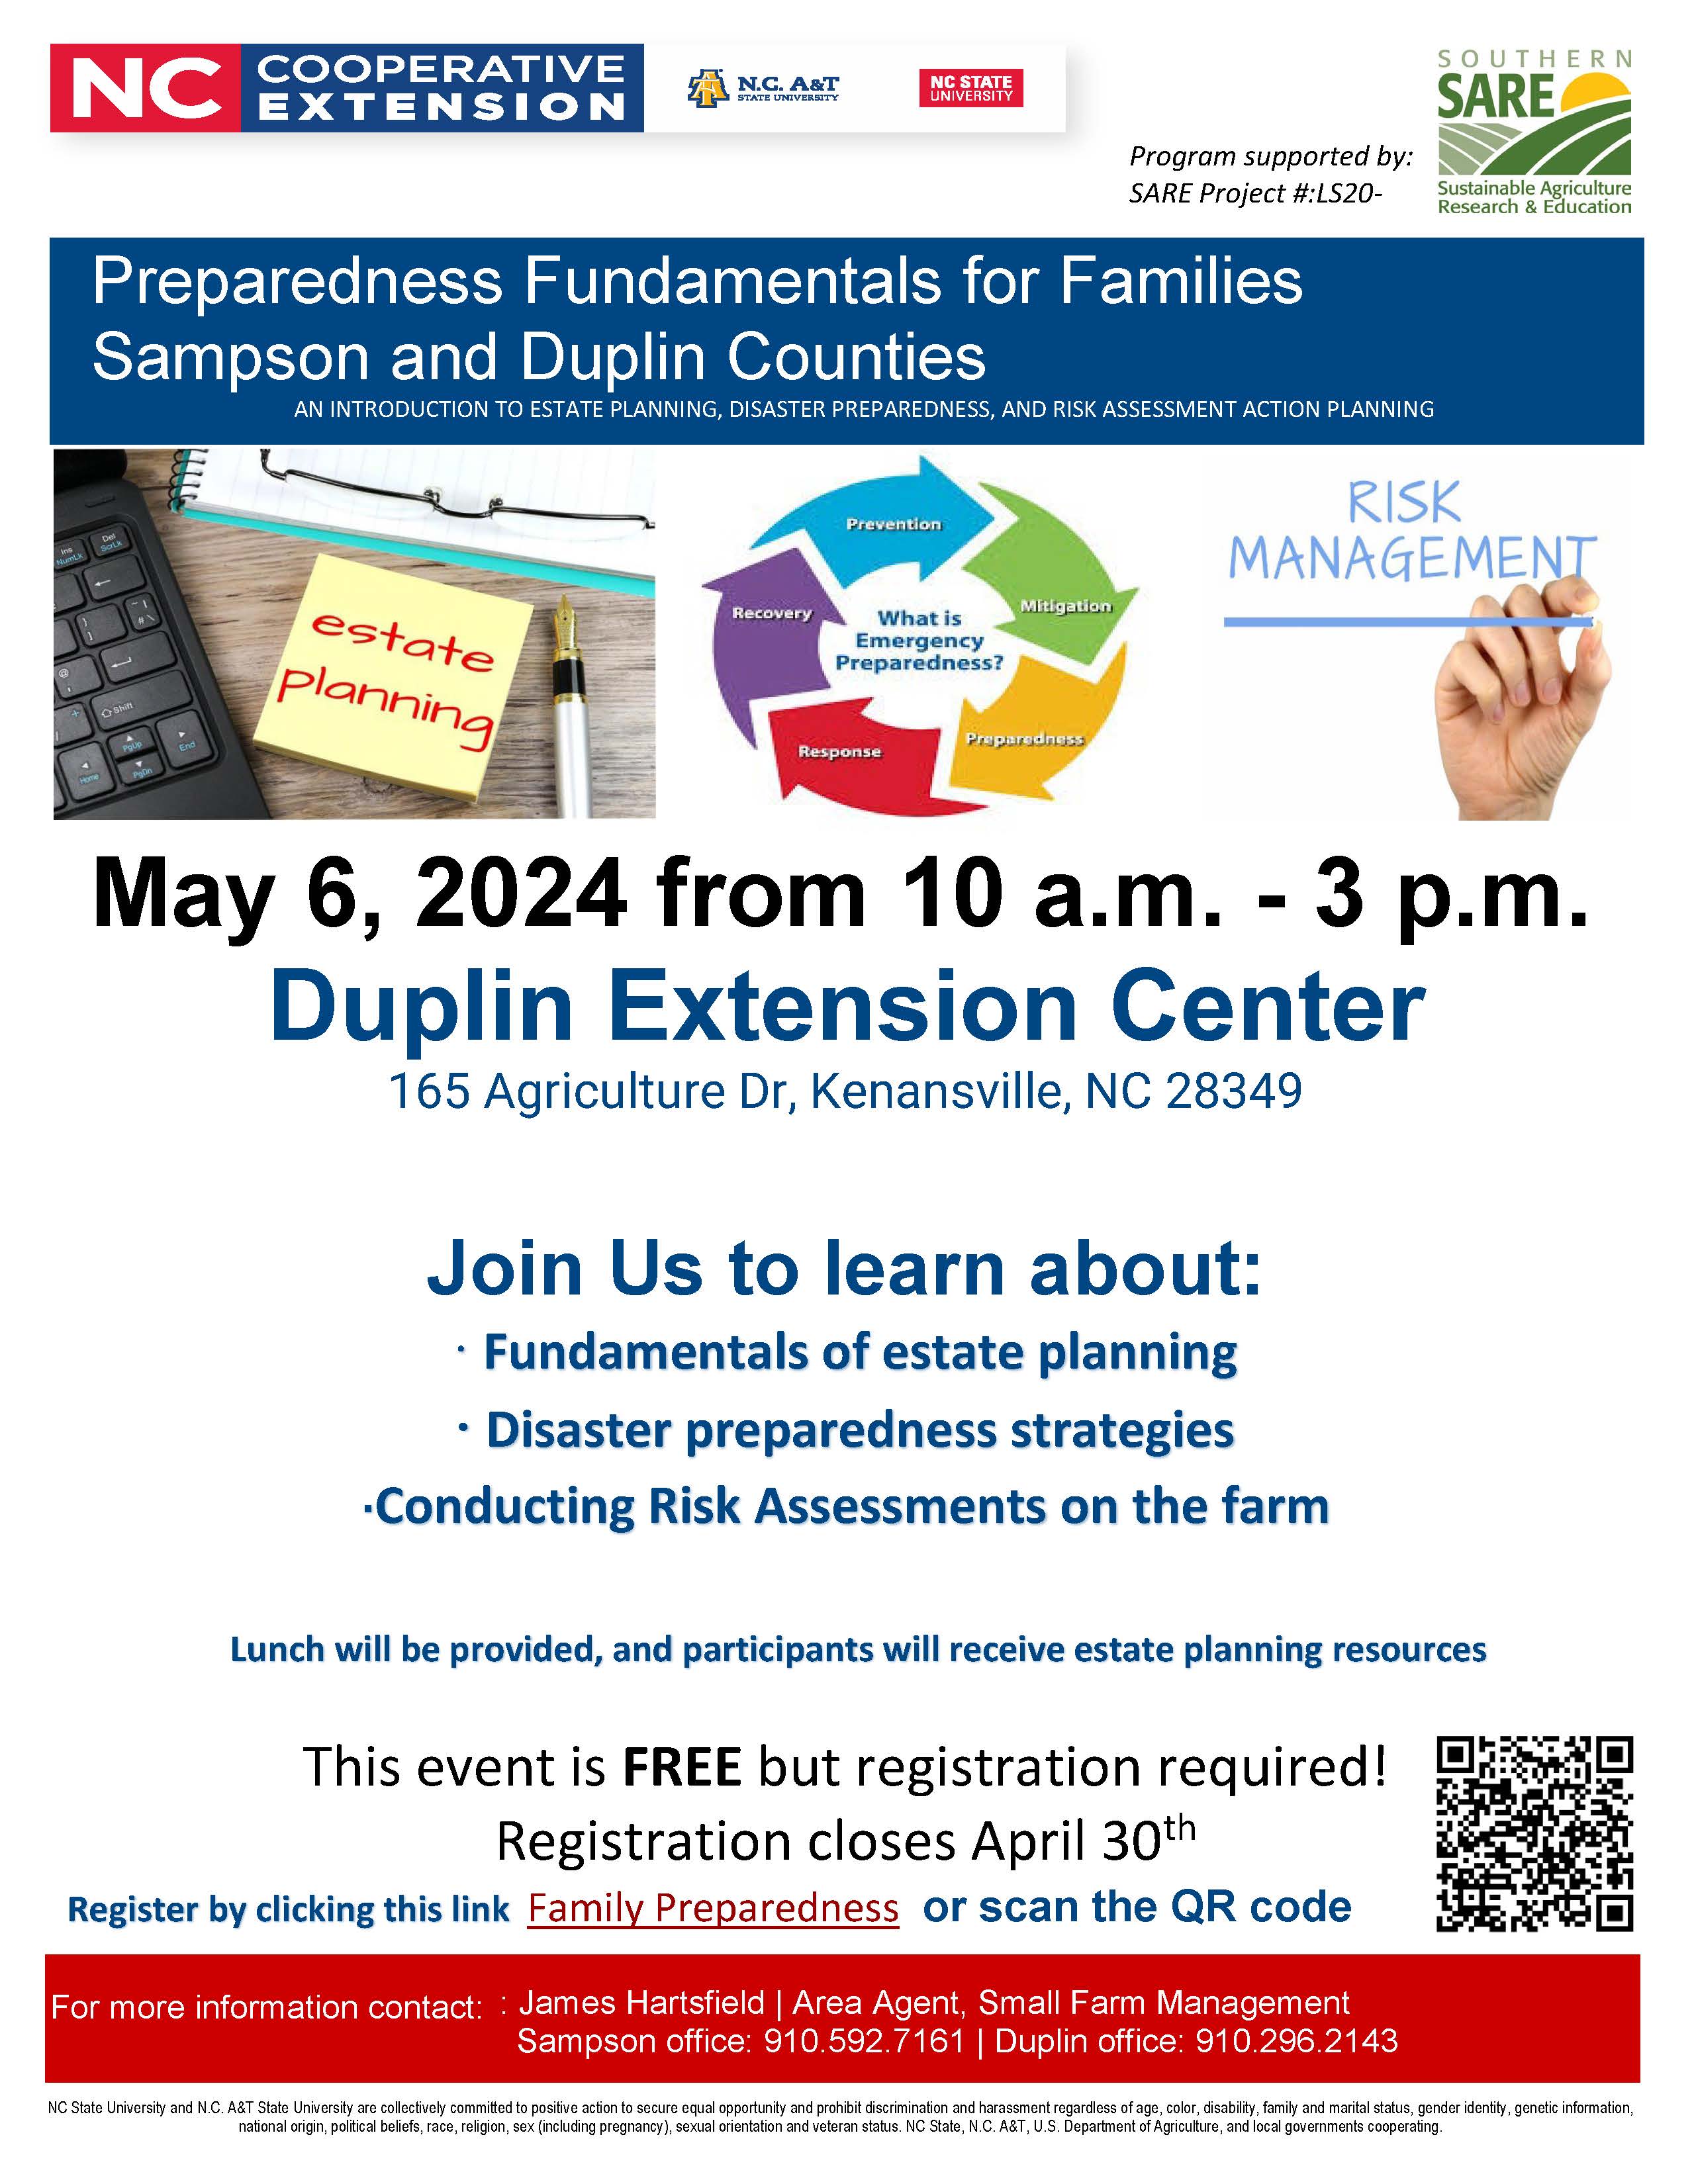 Duplin Extension Center Preparedness Fundamentals for Families